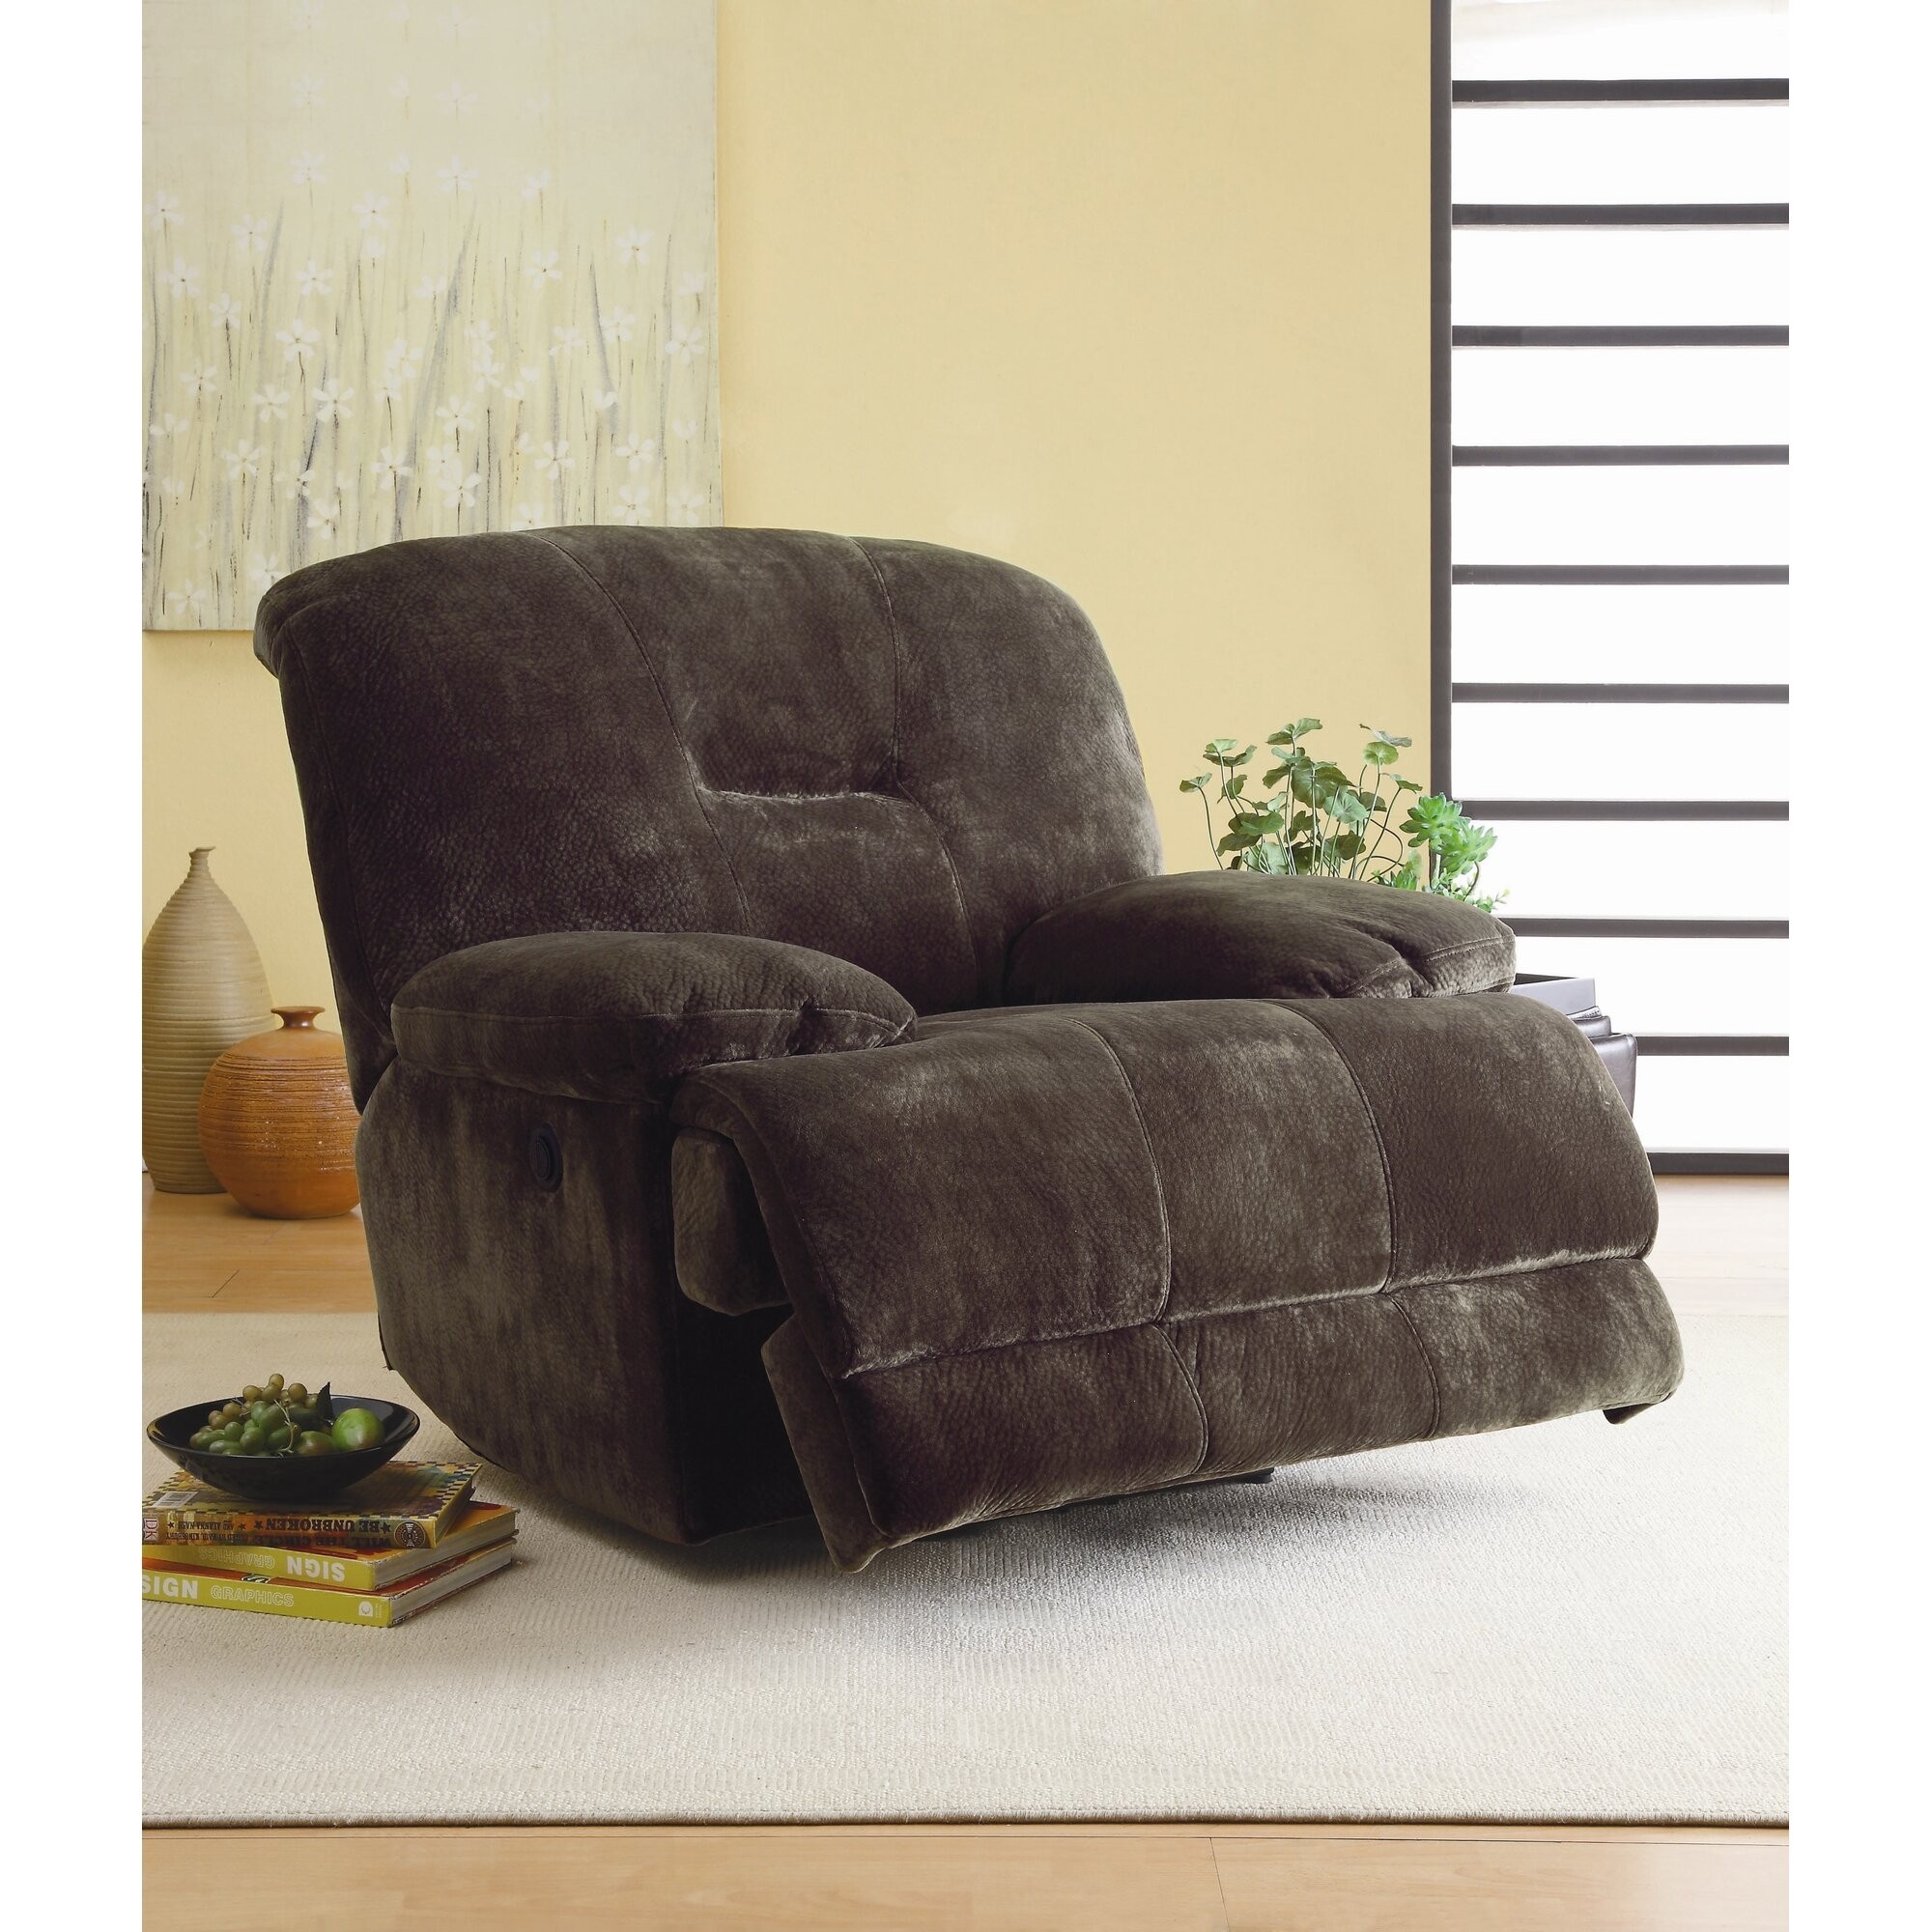 Homelegance 9723-1PW Upholstered Power Recliner Chair, Dark Brown, Textured Plush Microfiber